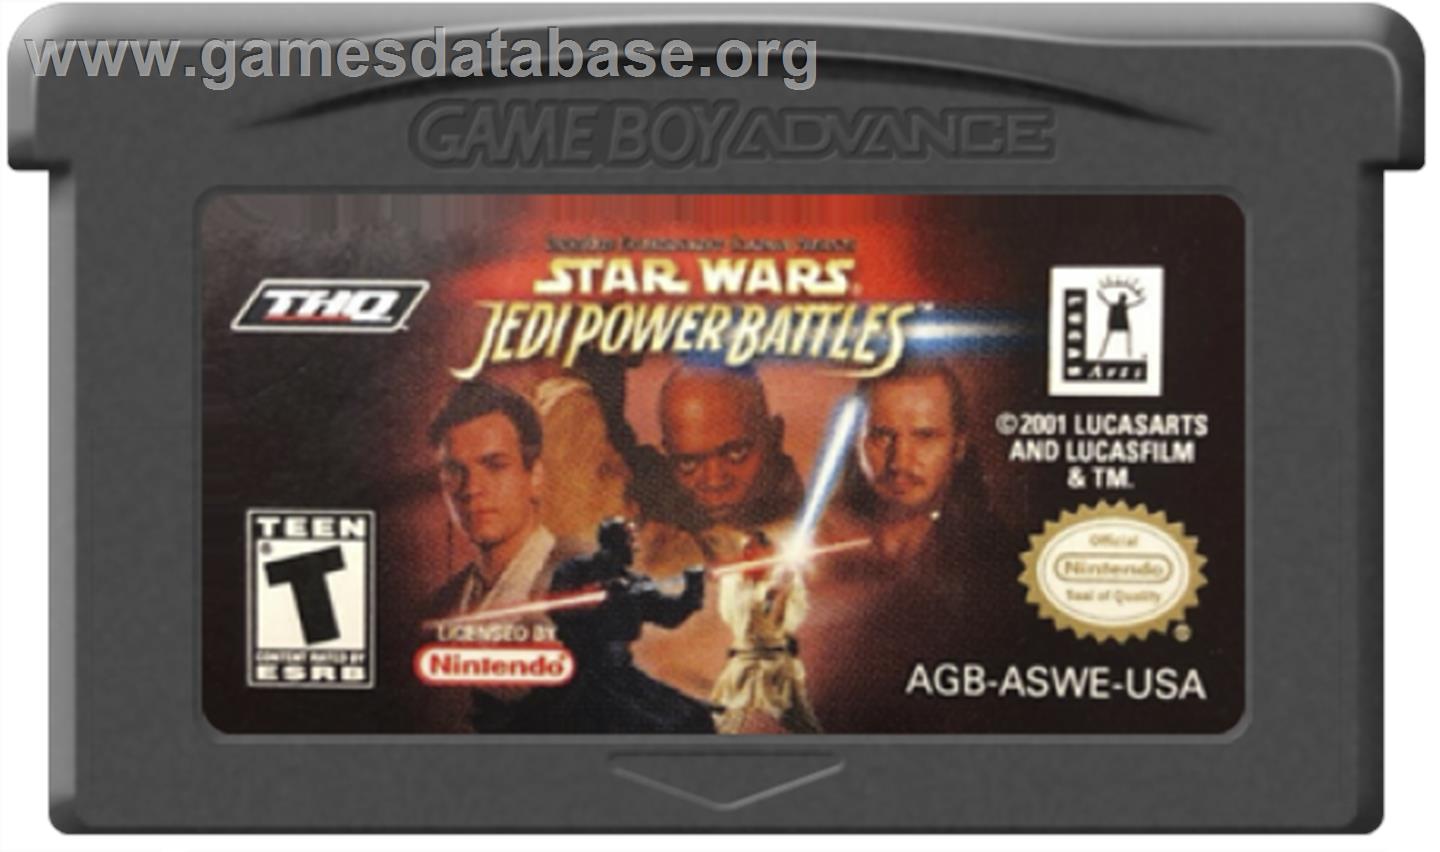 Star Wars: Episode I - Jedi Power Battles - Nintendo Game Boy Advance - Artwork - Cartridge